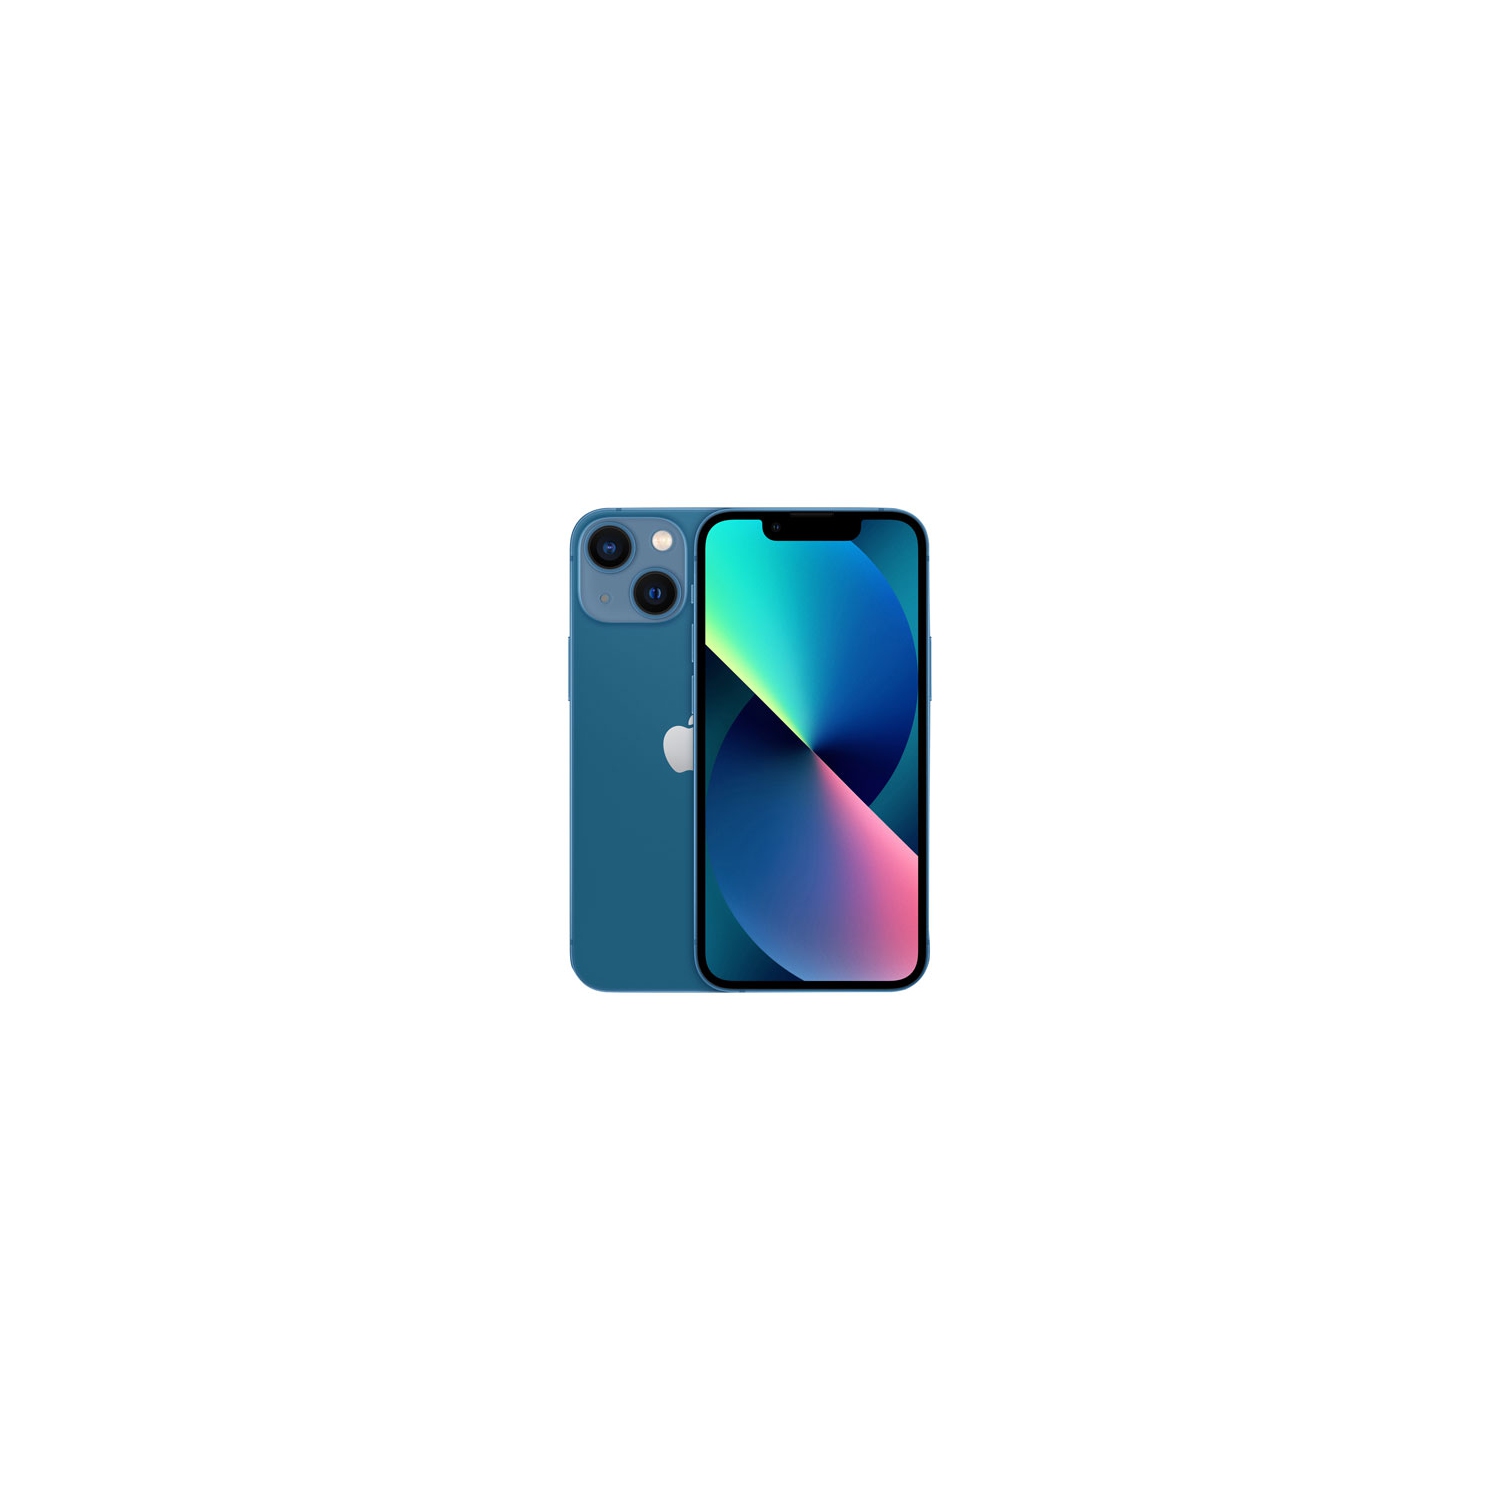 Apple iPhone 13 mini 256GB - Blue - Unlocked - Certified Refurbished